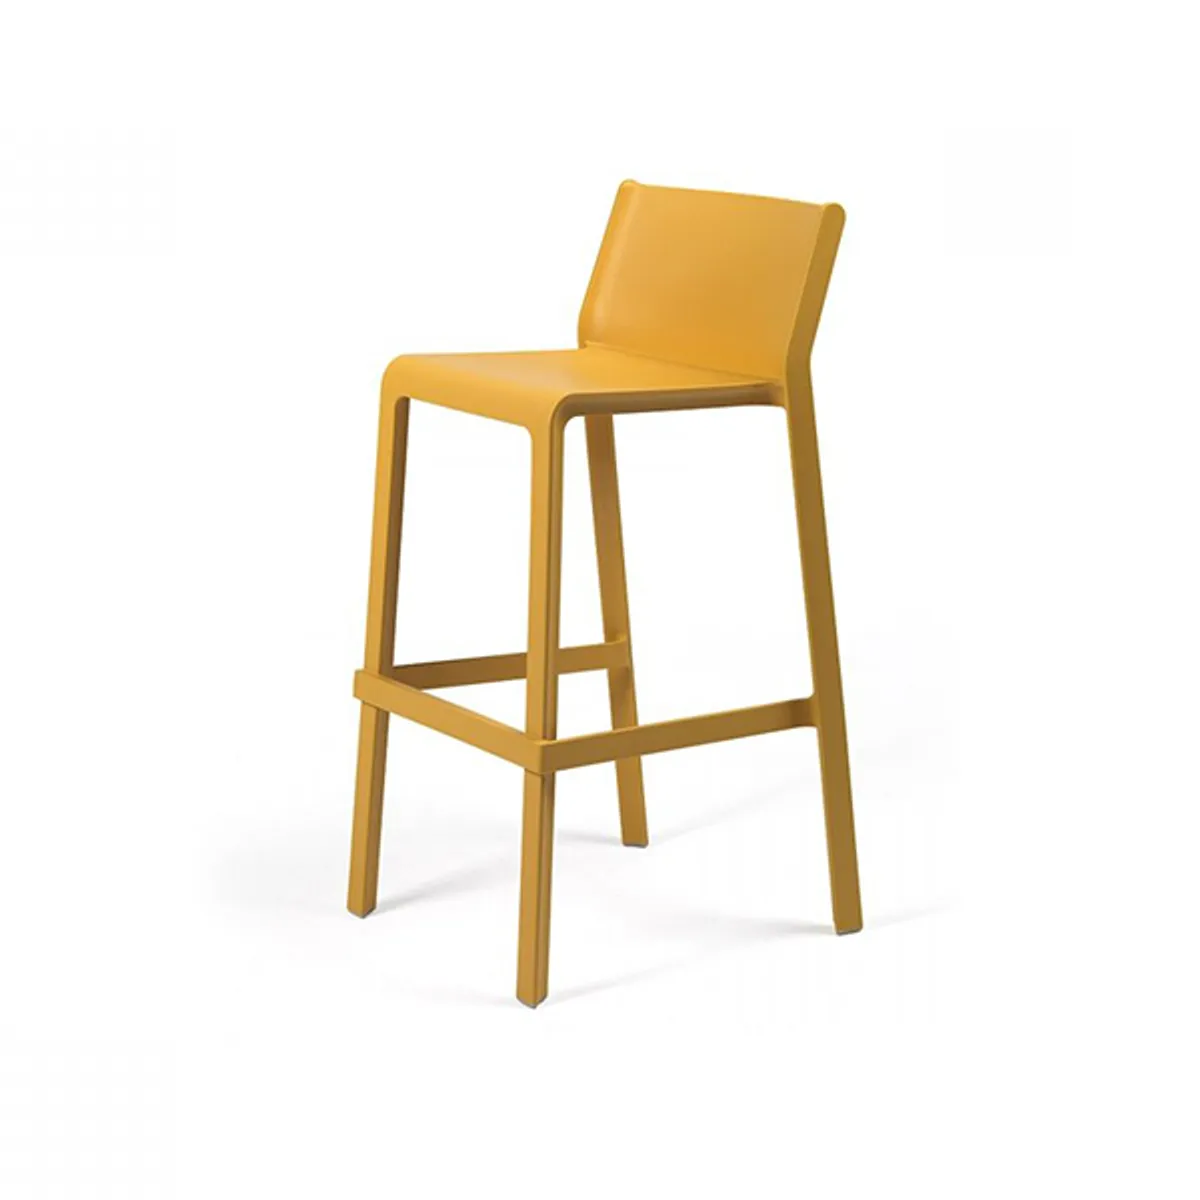 Trill Bar Stool Yellow Fibreglass Furniture For Exterior Use